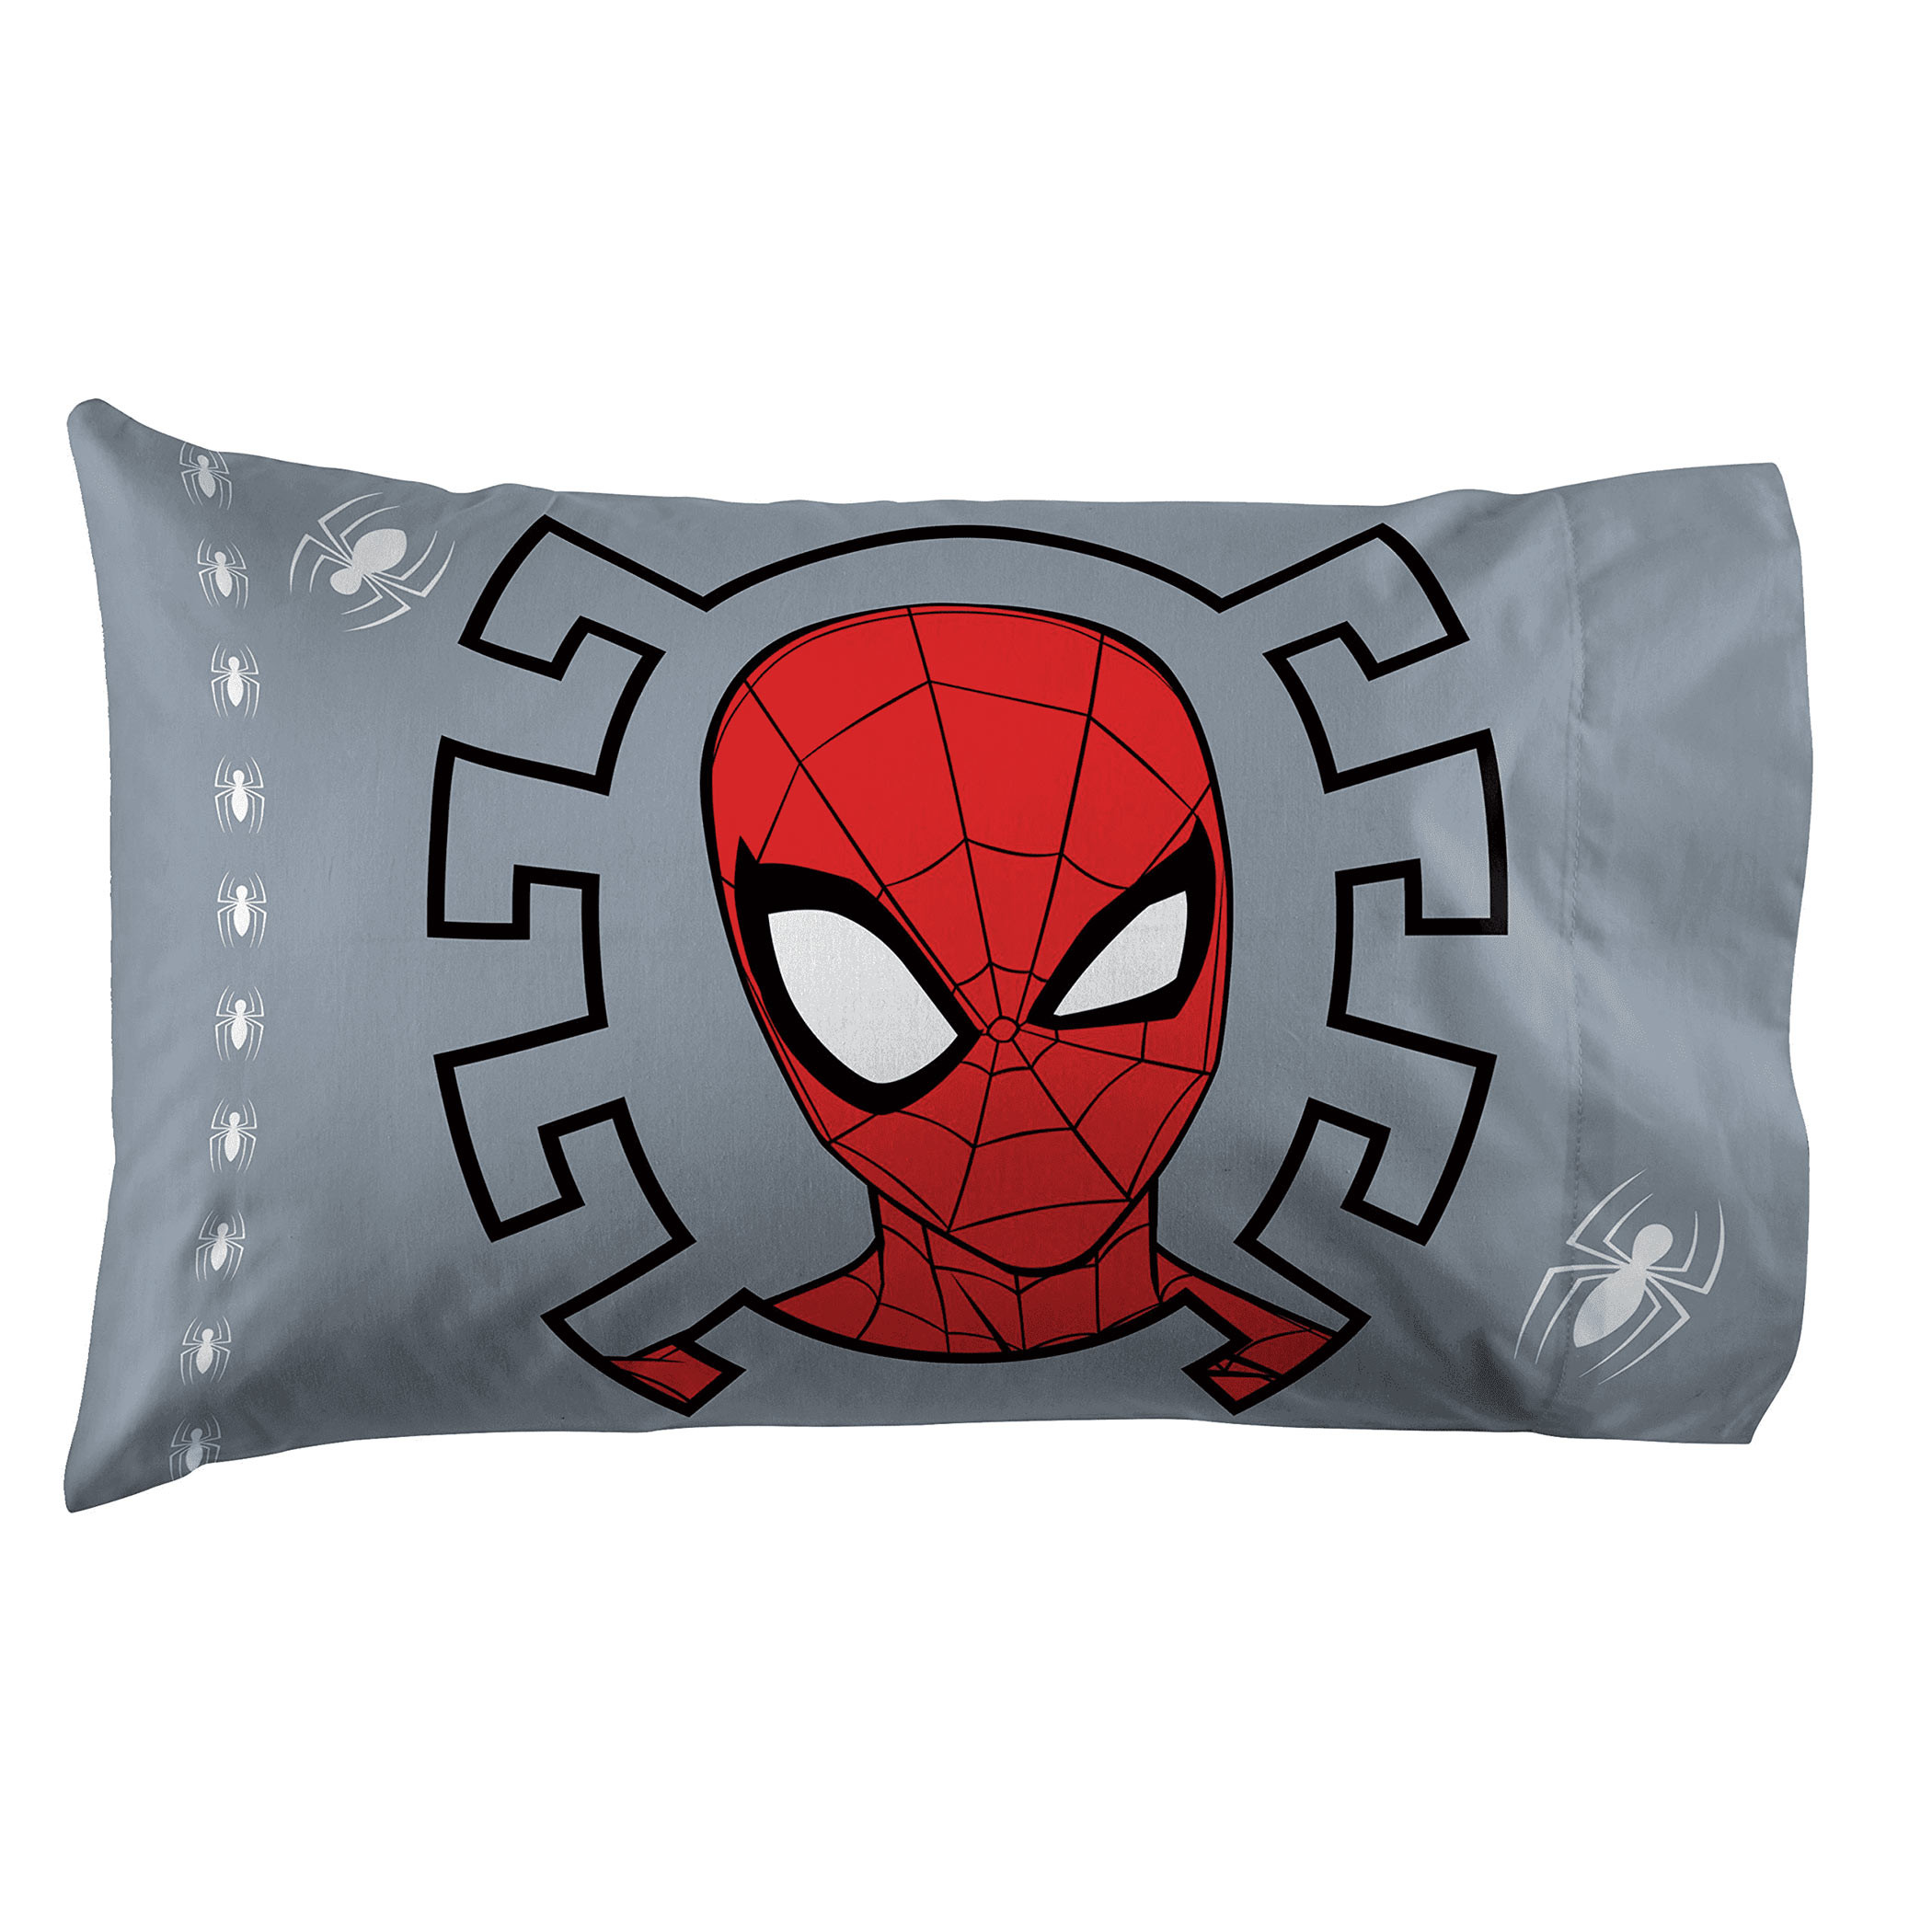 Spider-Man Mask Pillow Case